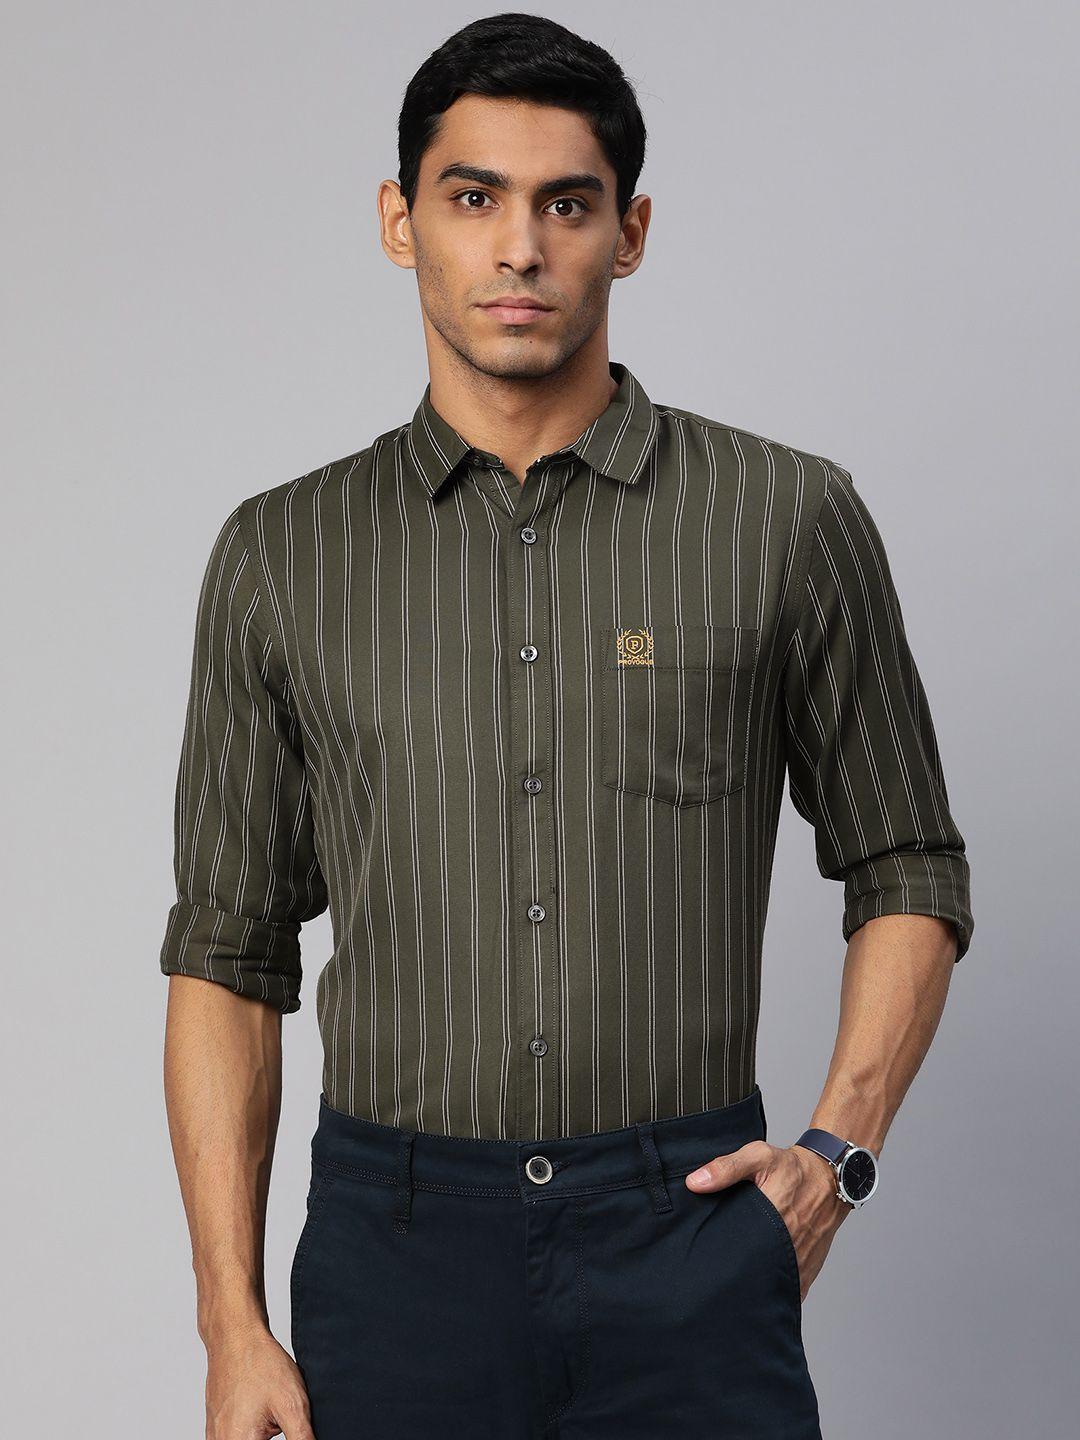 provogue-men-olive-green-slim-fit-striped-shirt